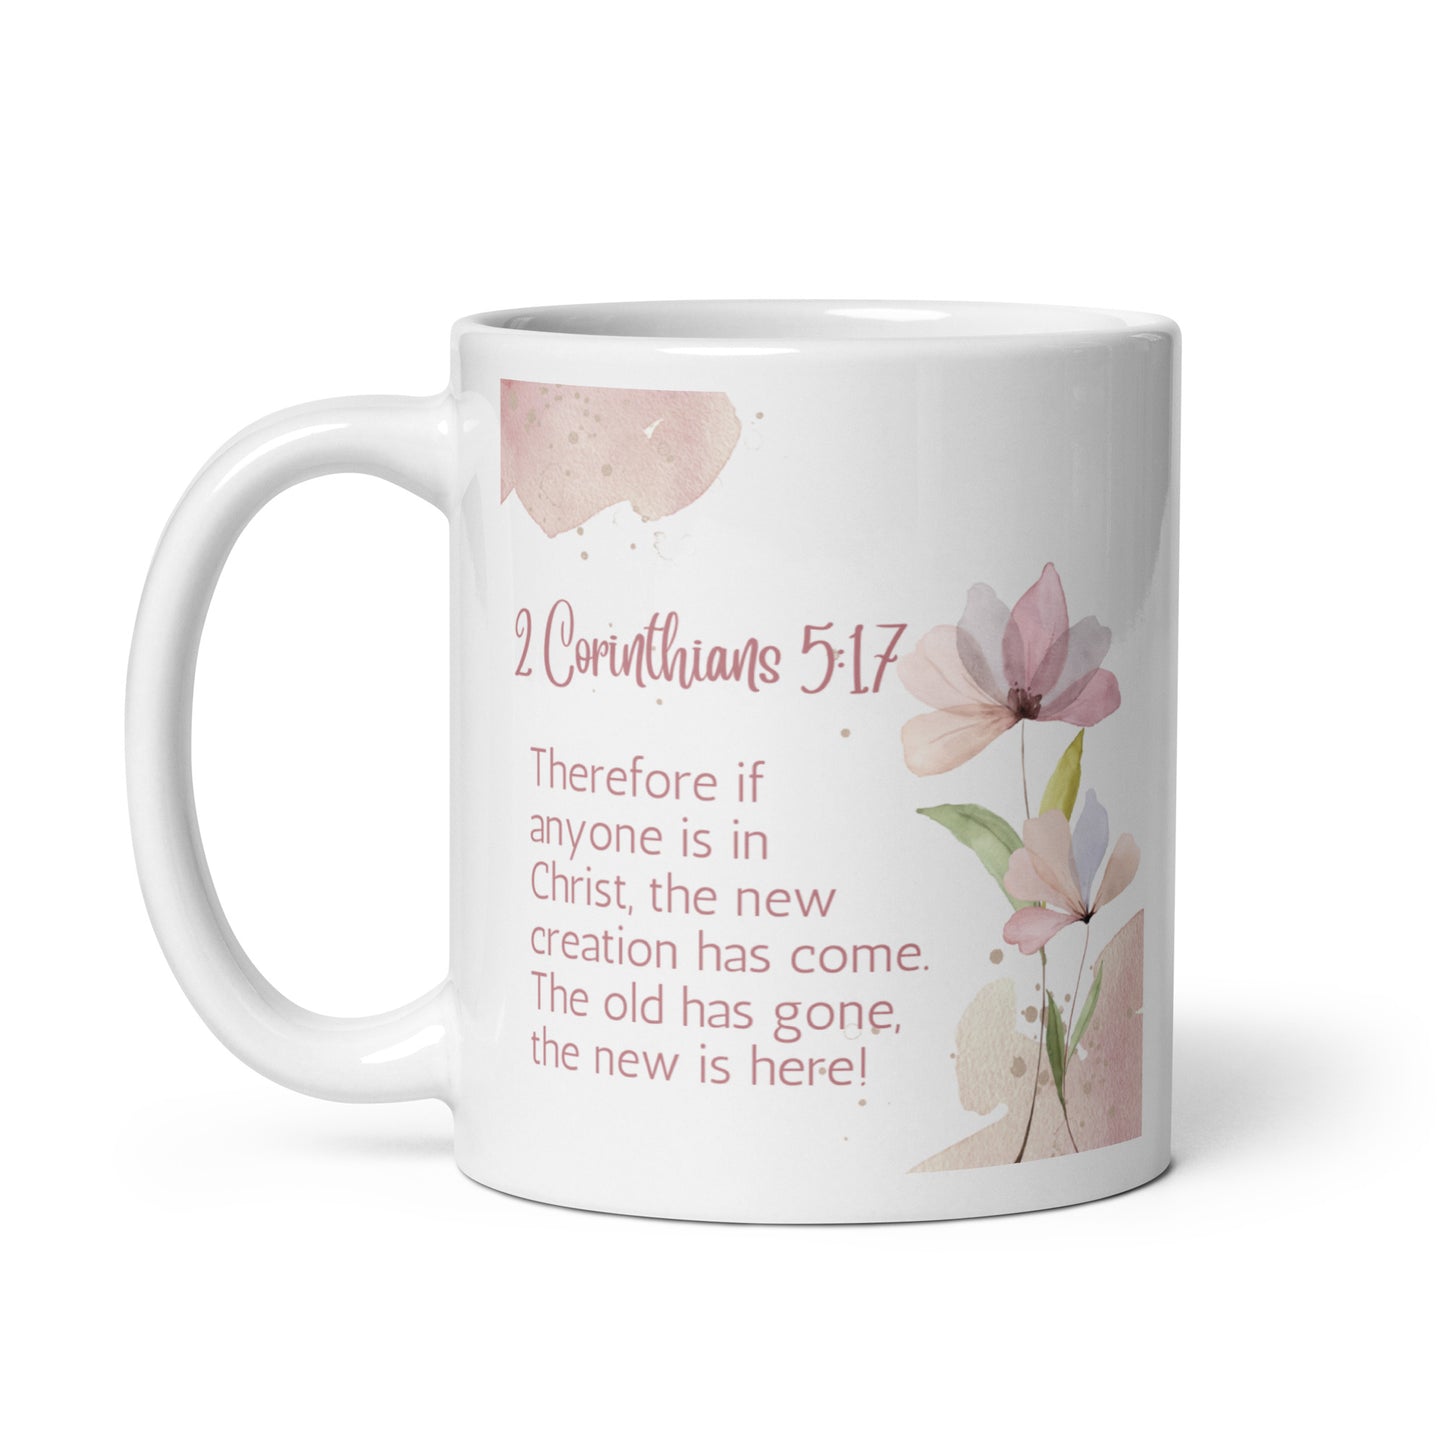 2 Corinthians 5:17 White glossy mug